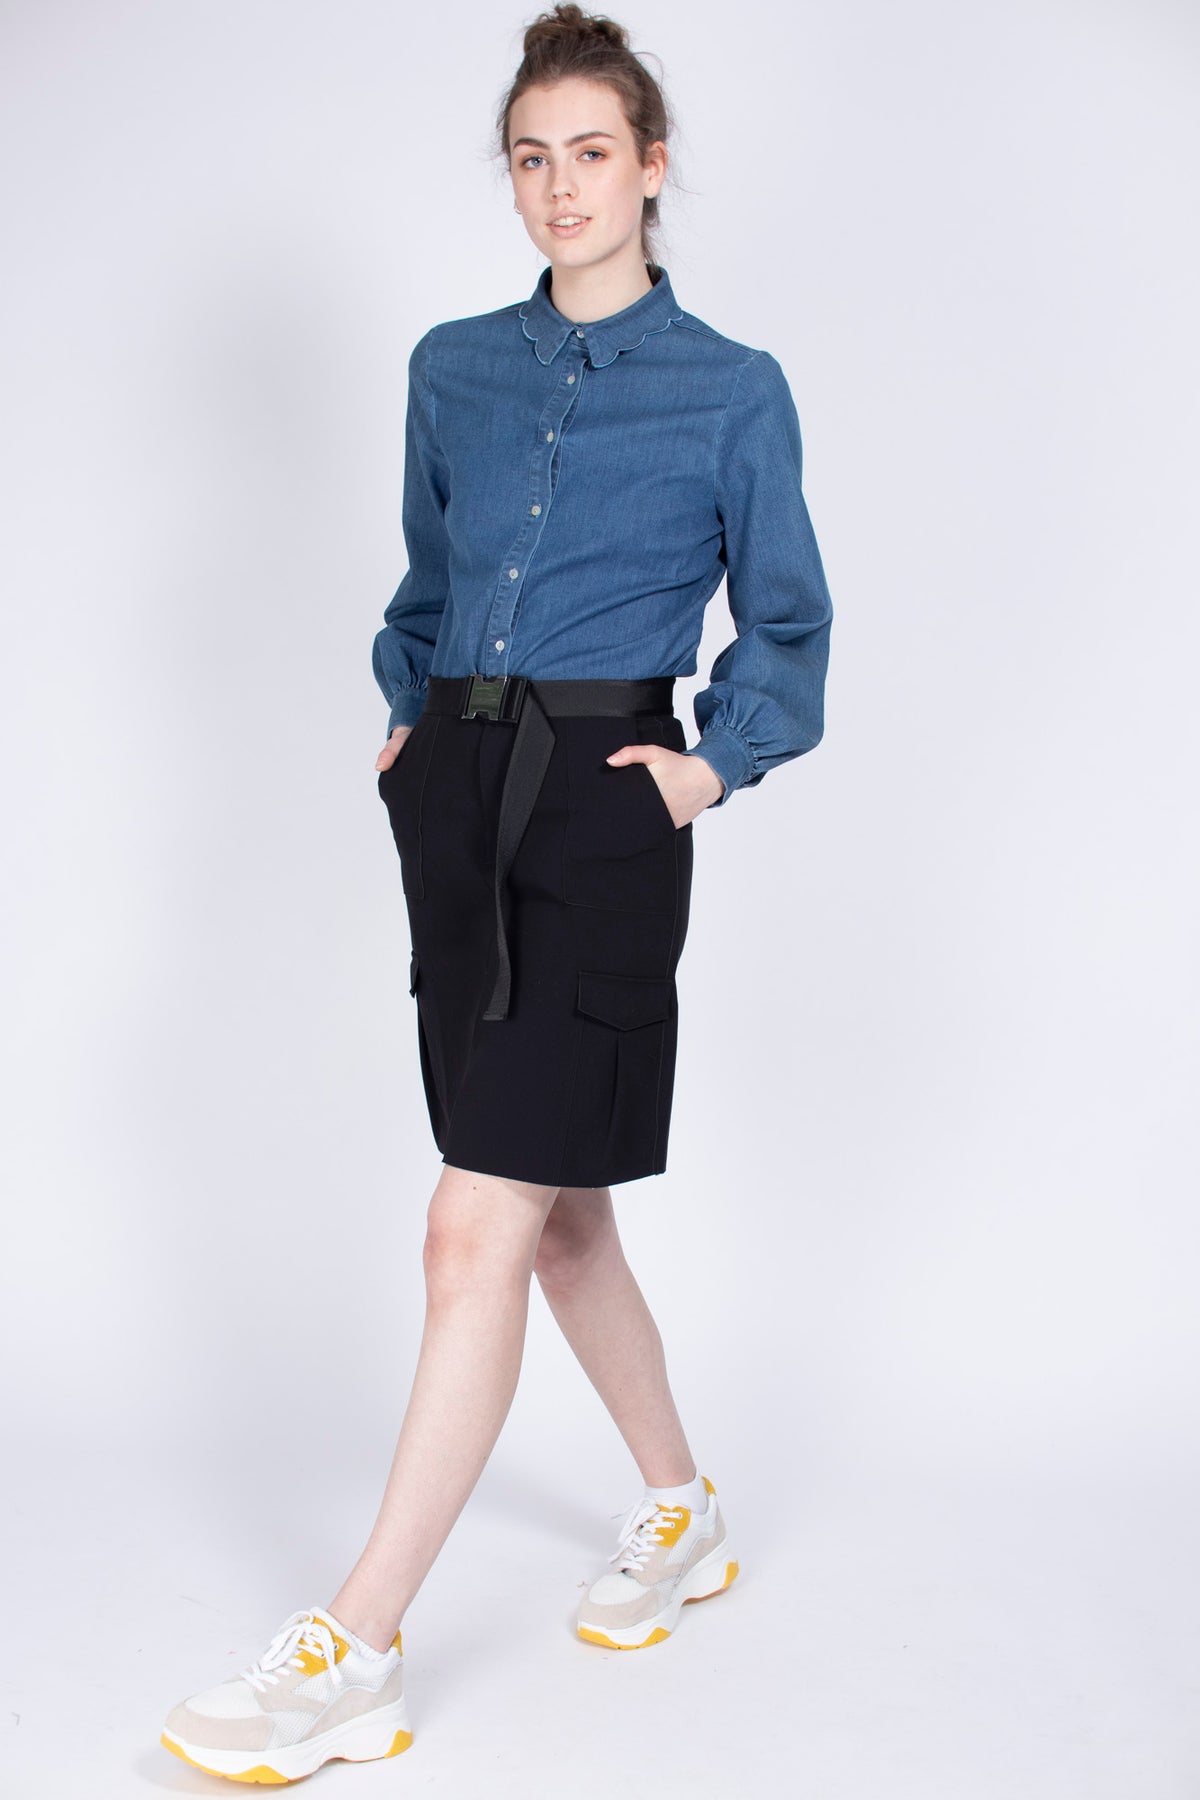 Jeans Chambray Shirt - Xenon Blue - MAUD - Bluser & Skjorter - VILLOID.no